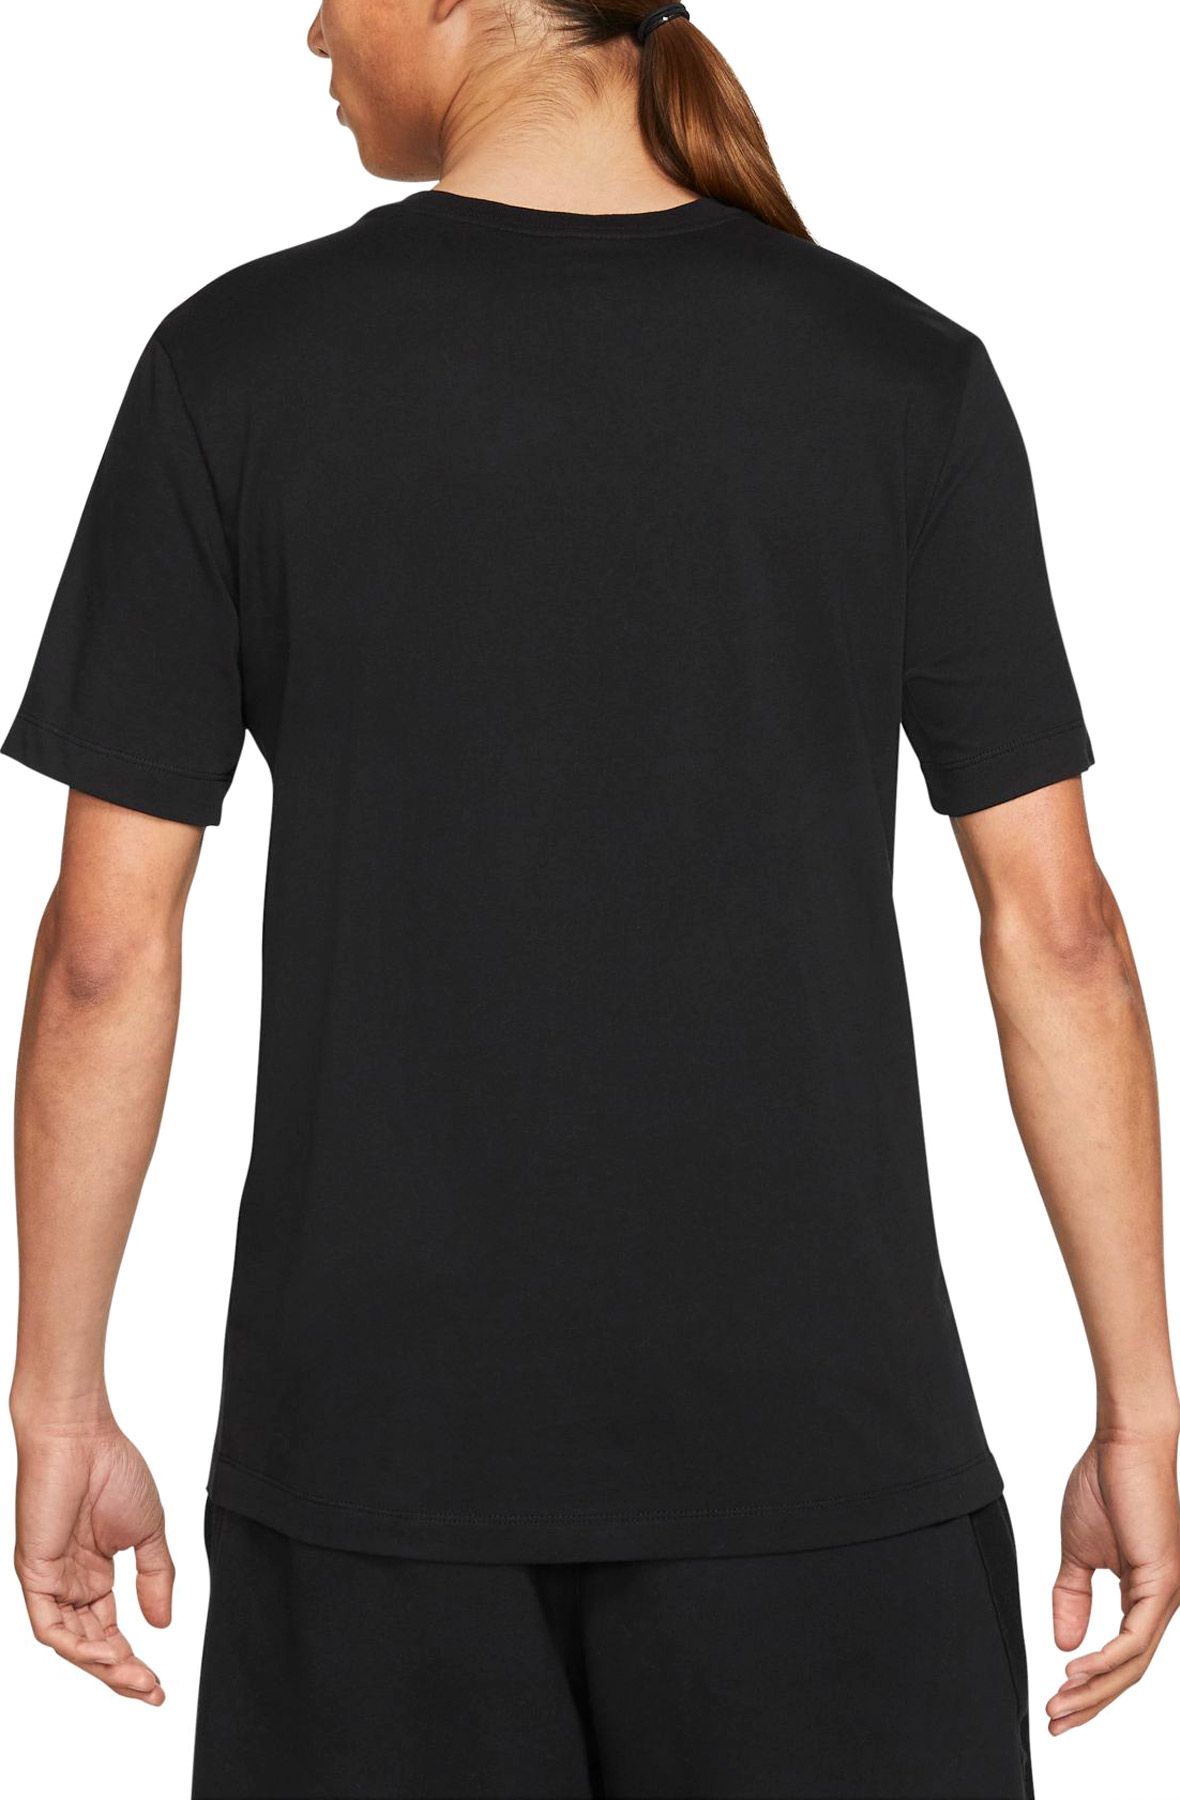  Men's Jordan White Air Wordmark T-Shirt, White/Black/Gym Red,  XL Regular US : Clothing, Shoes & Jewelry